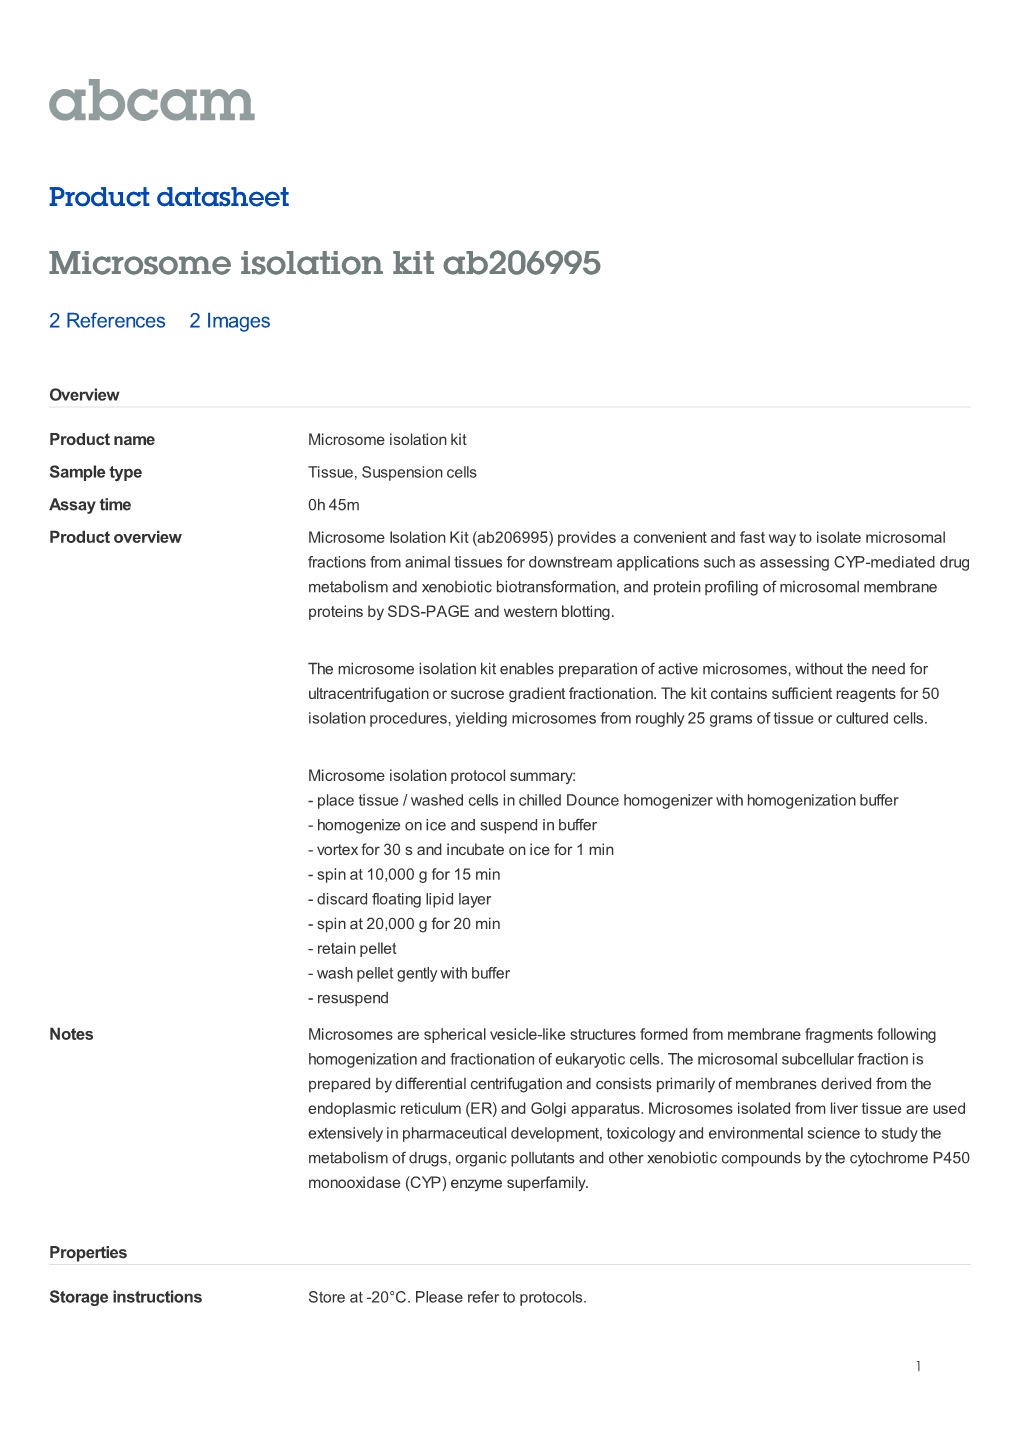 Microsome Isolation Kit Ab206995